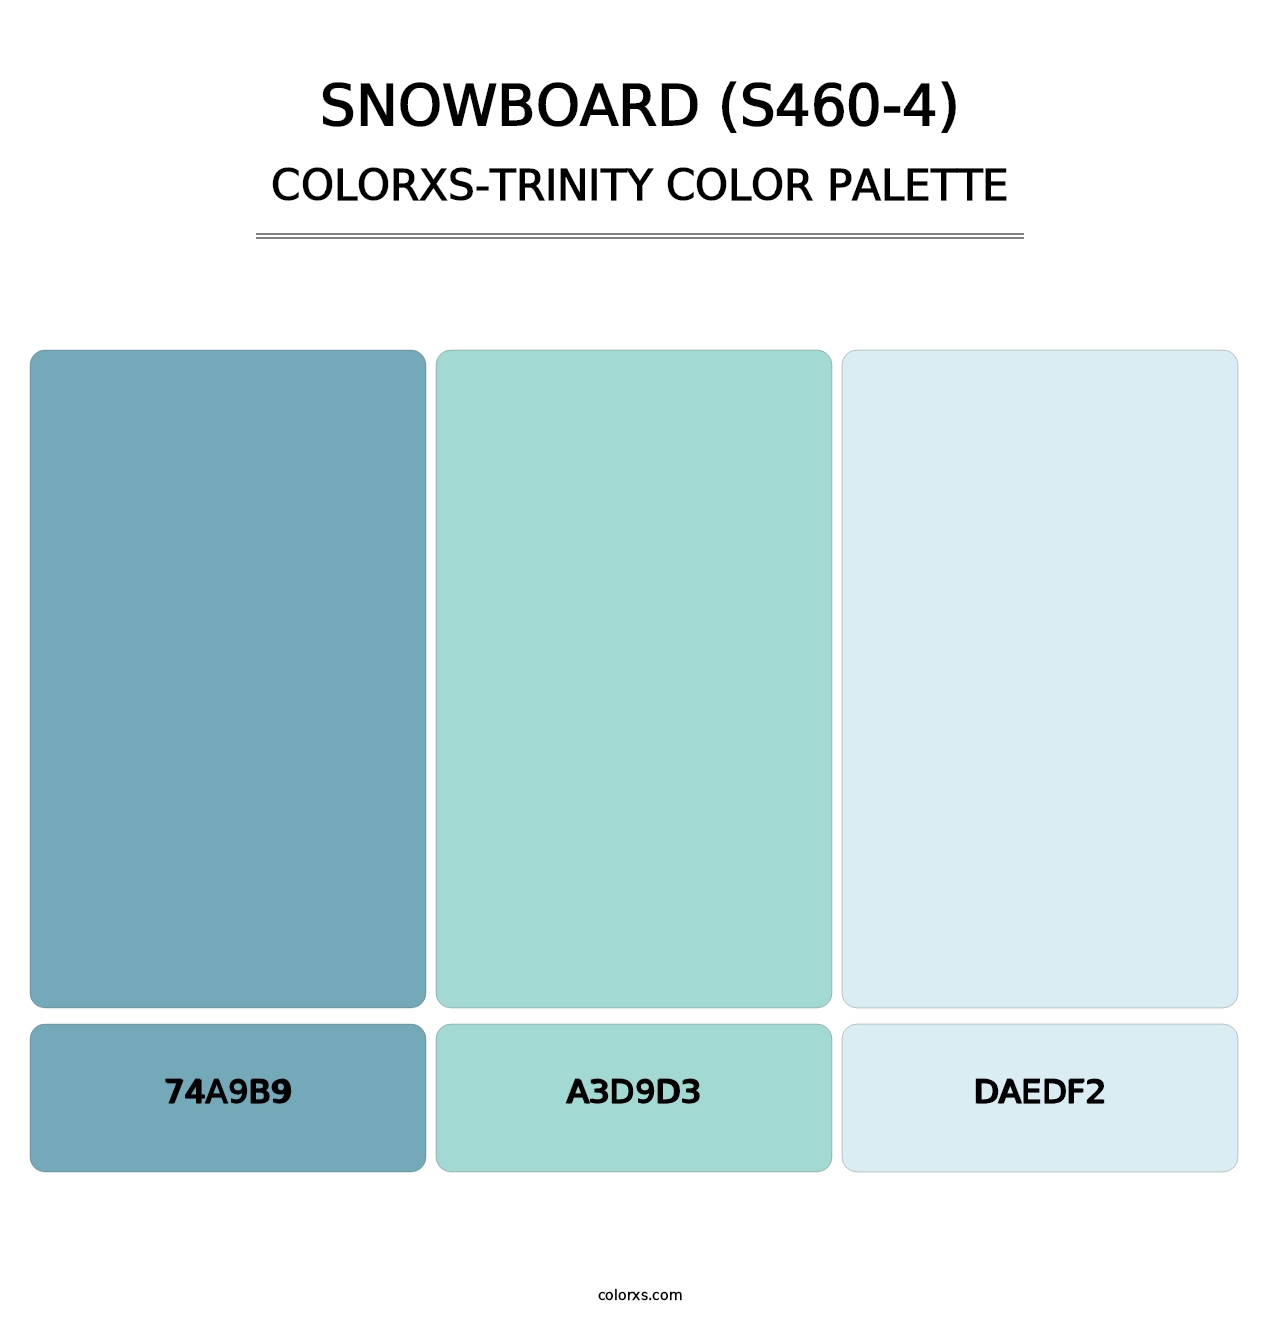 Snowboard (S460-4) - Colorxs Trinity Palette